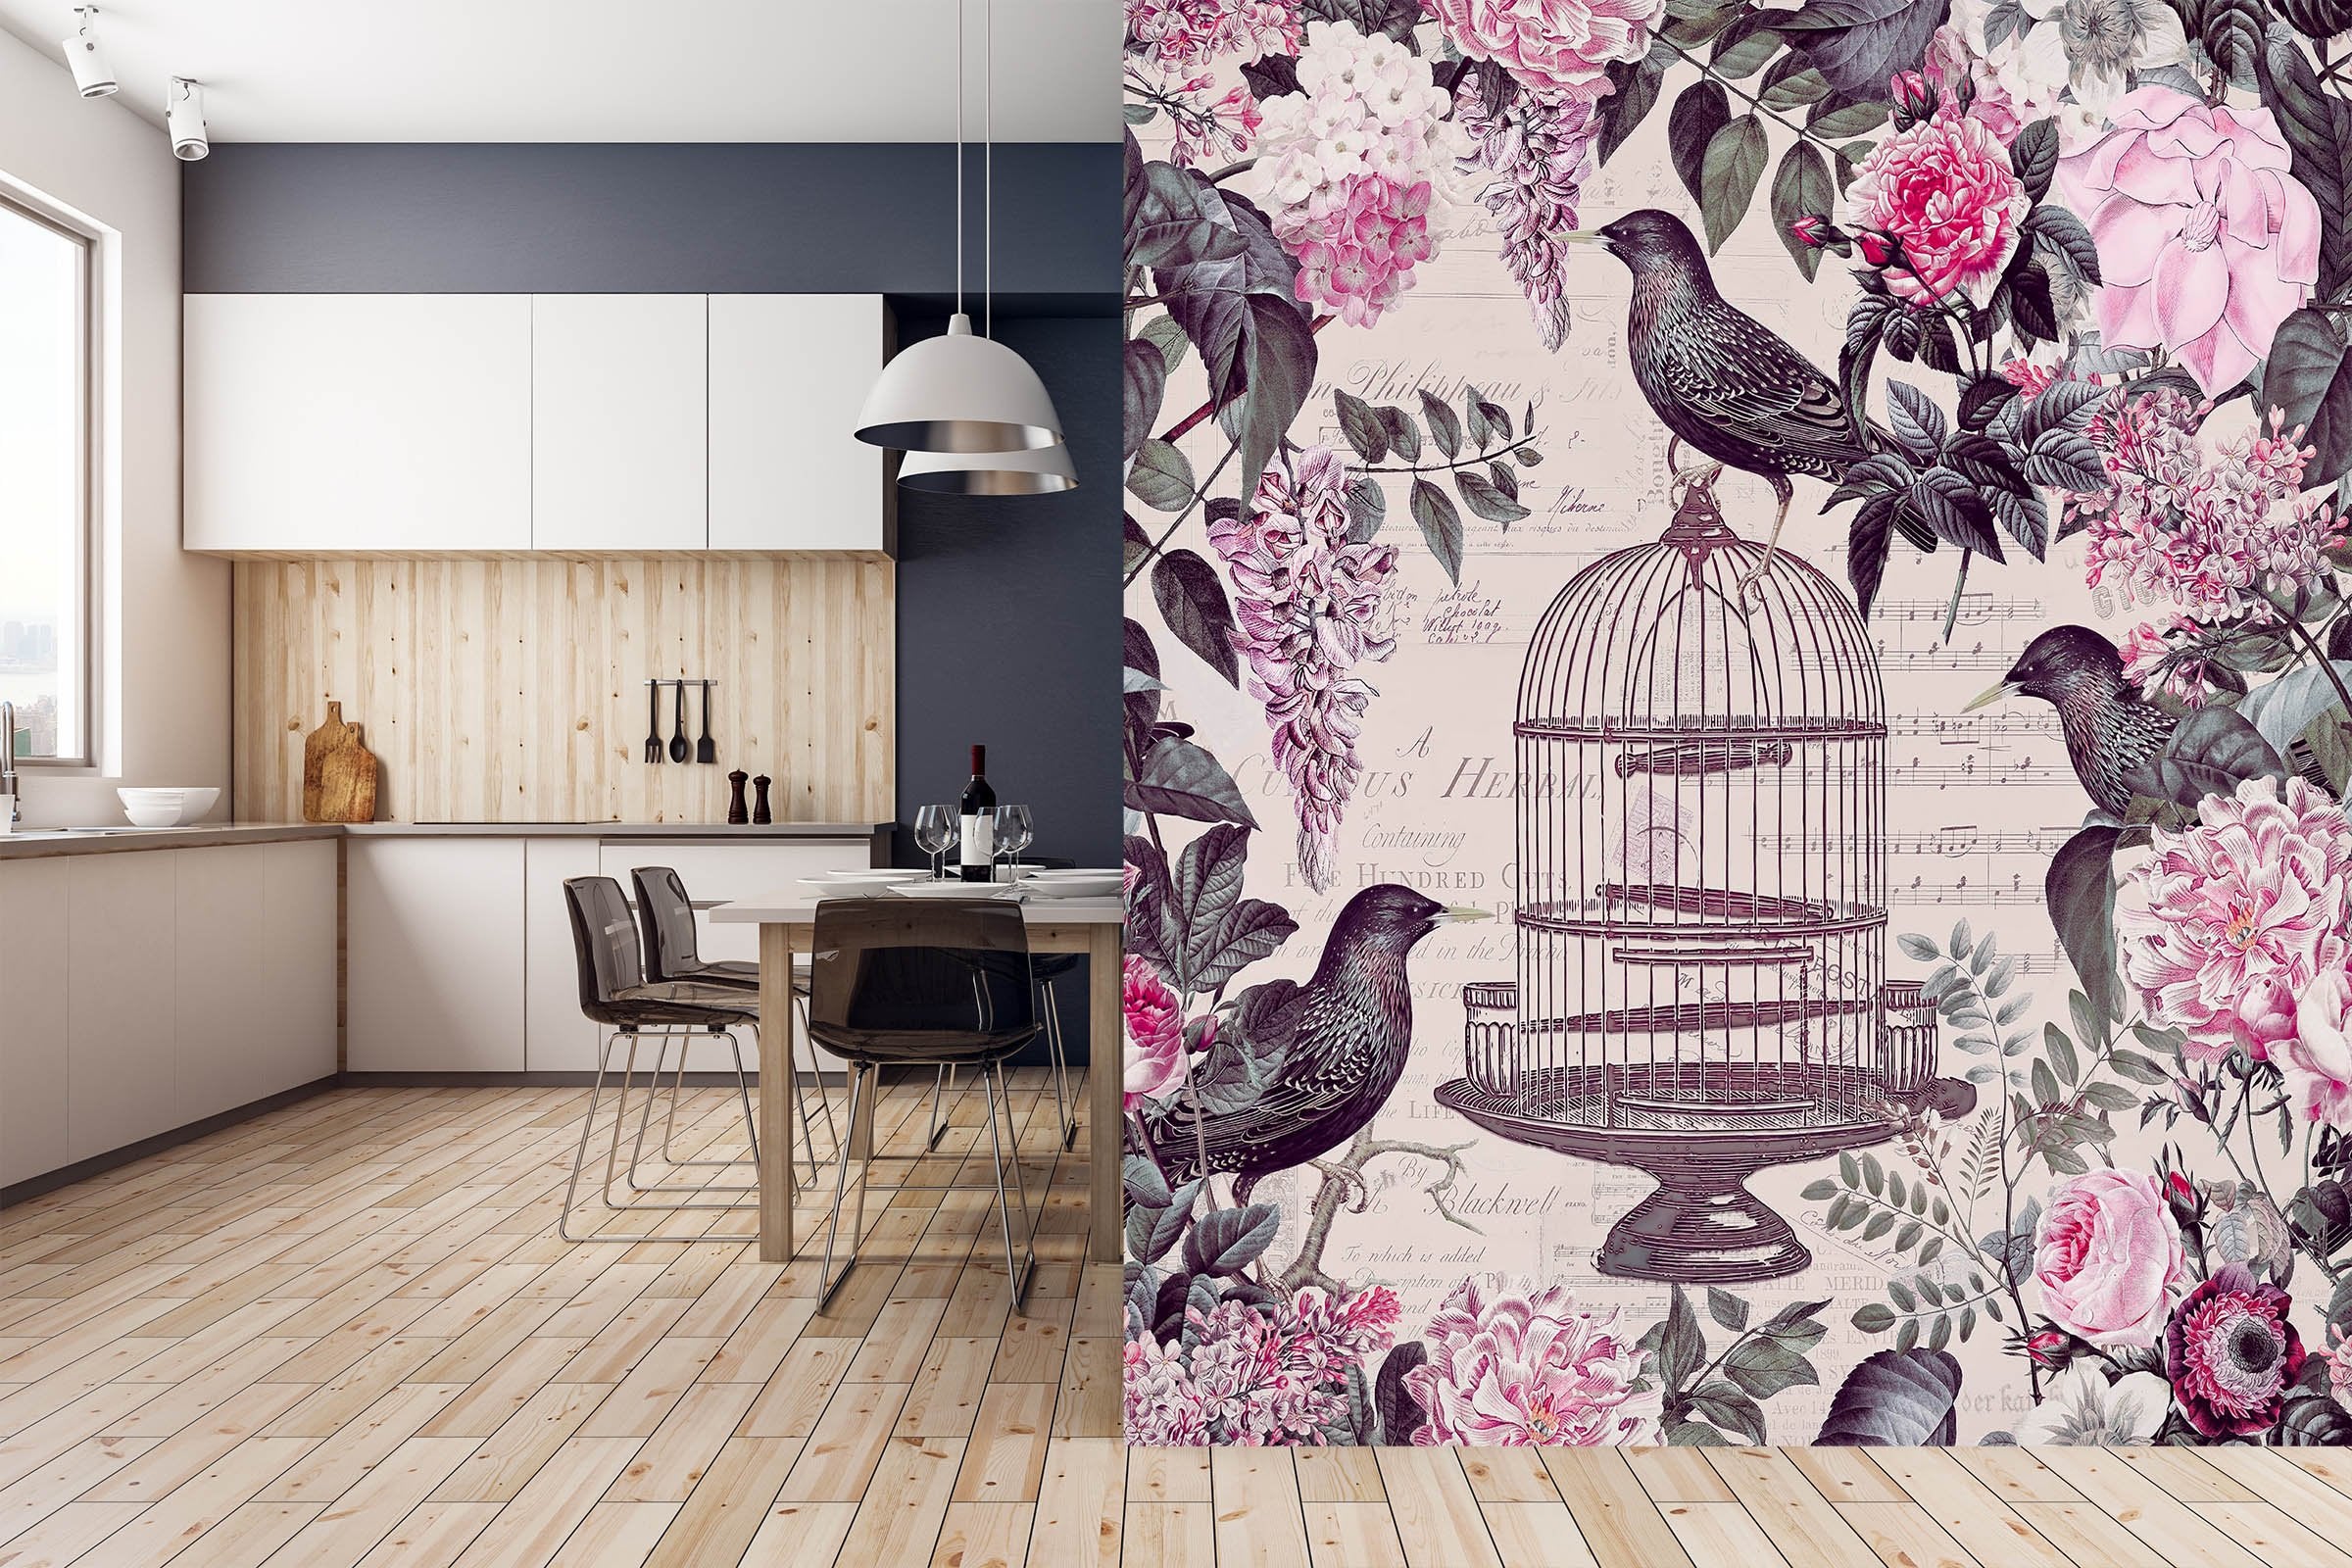 3D Birdcage And Flowers 1439 Andrea haase Wall Mural Wall Murals Wallpaper AJ Wallpaper 